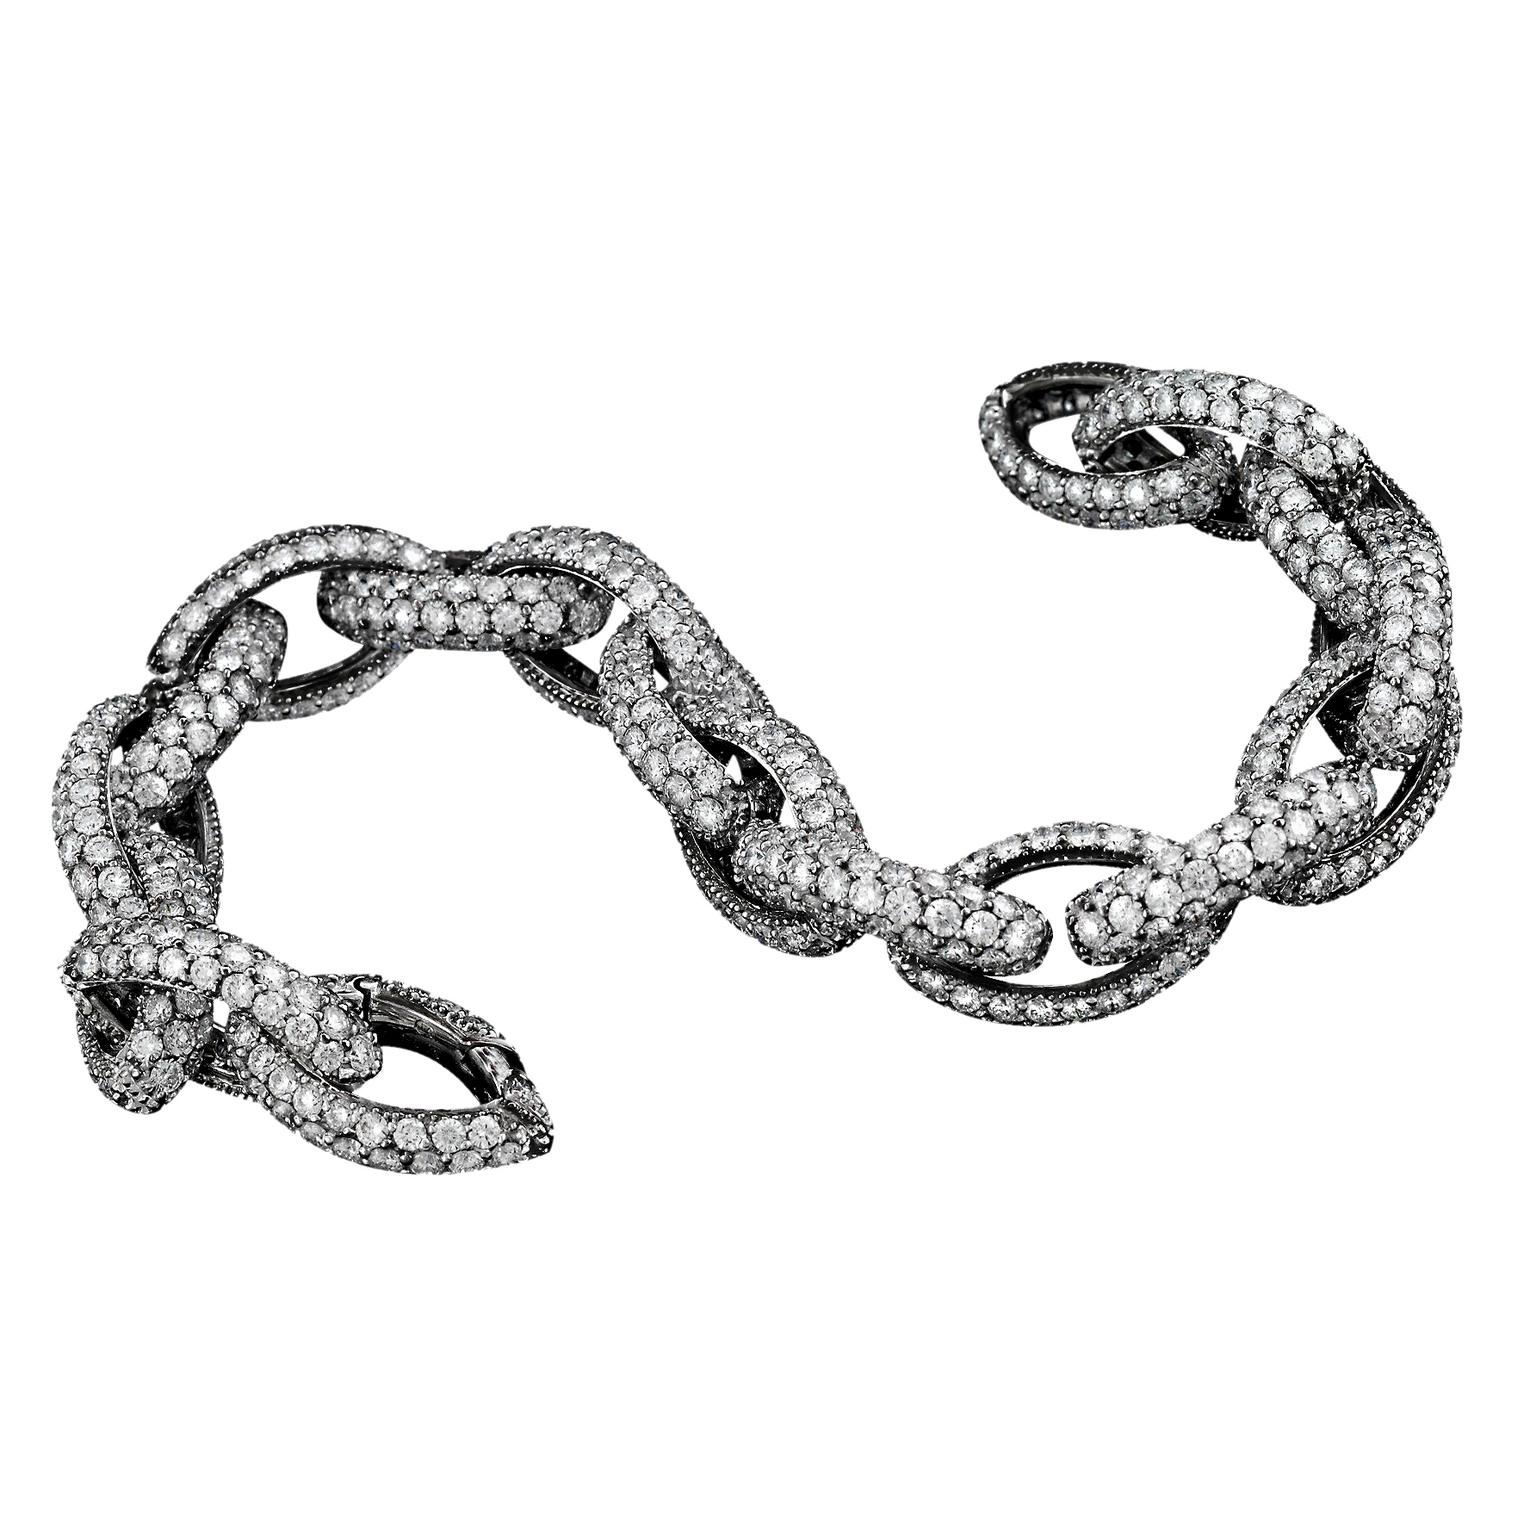 Avakian diamond Links bracelet